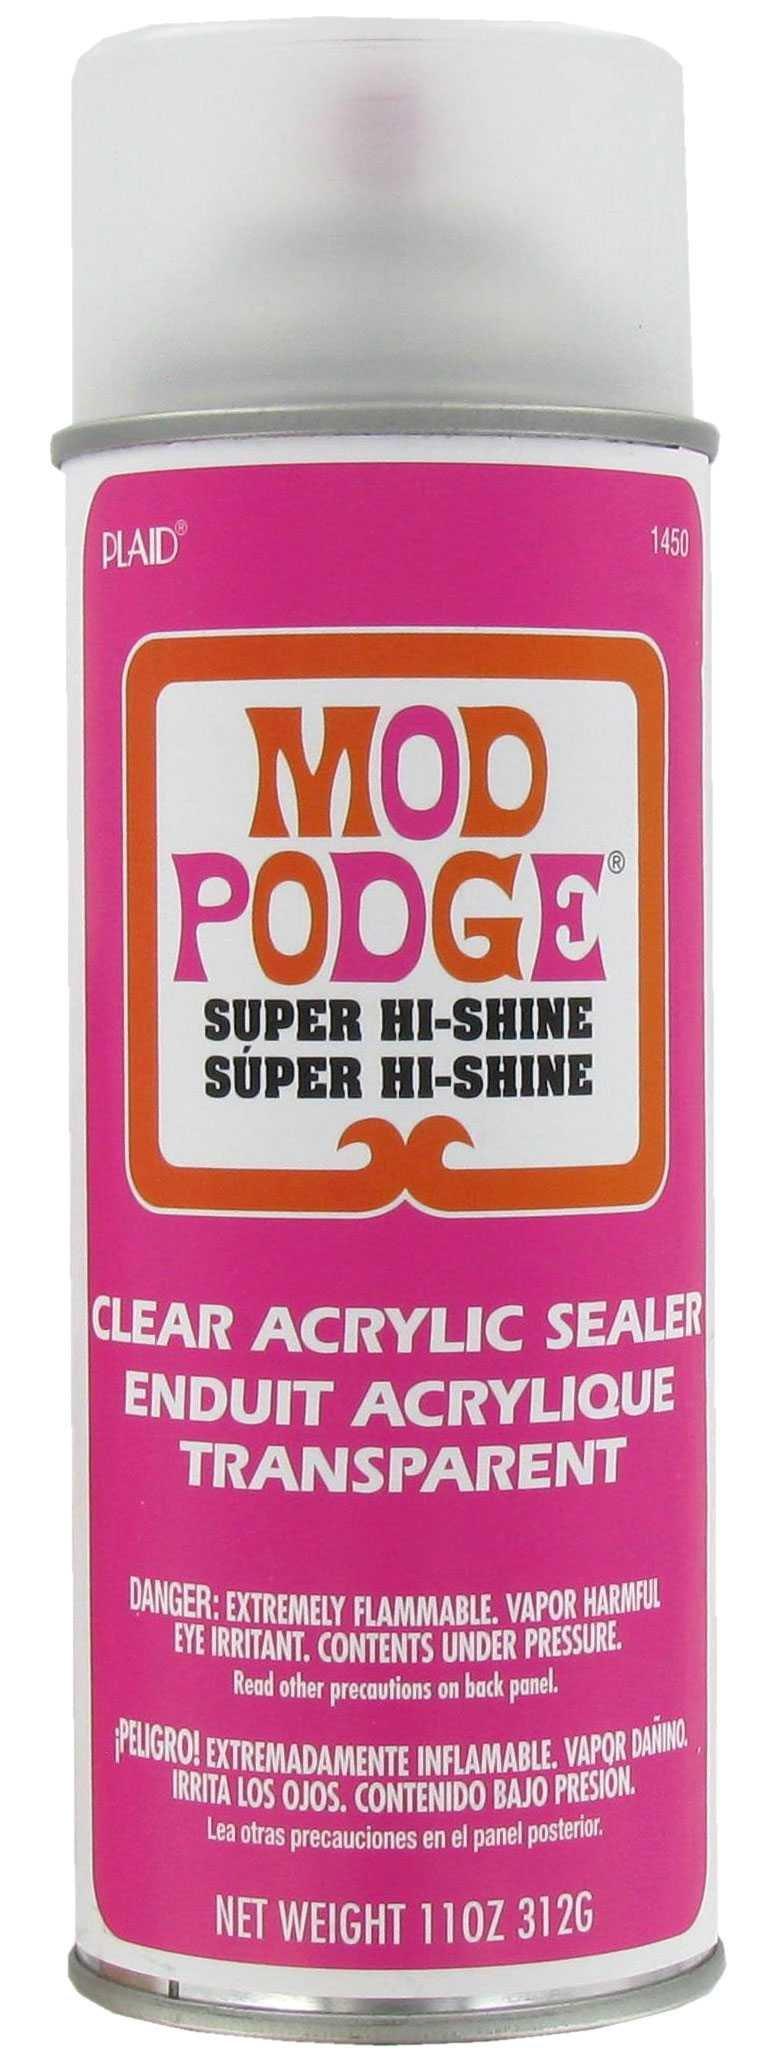 Mod Podge Super Hi-Shine Acrylic Sealer